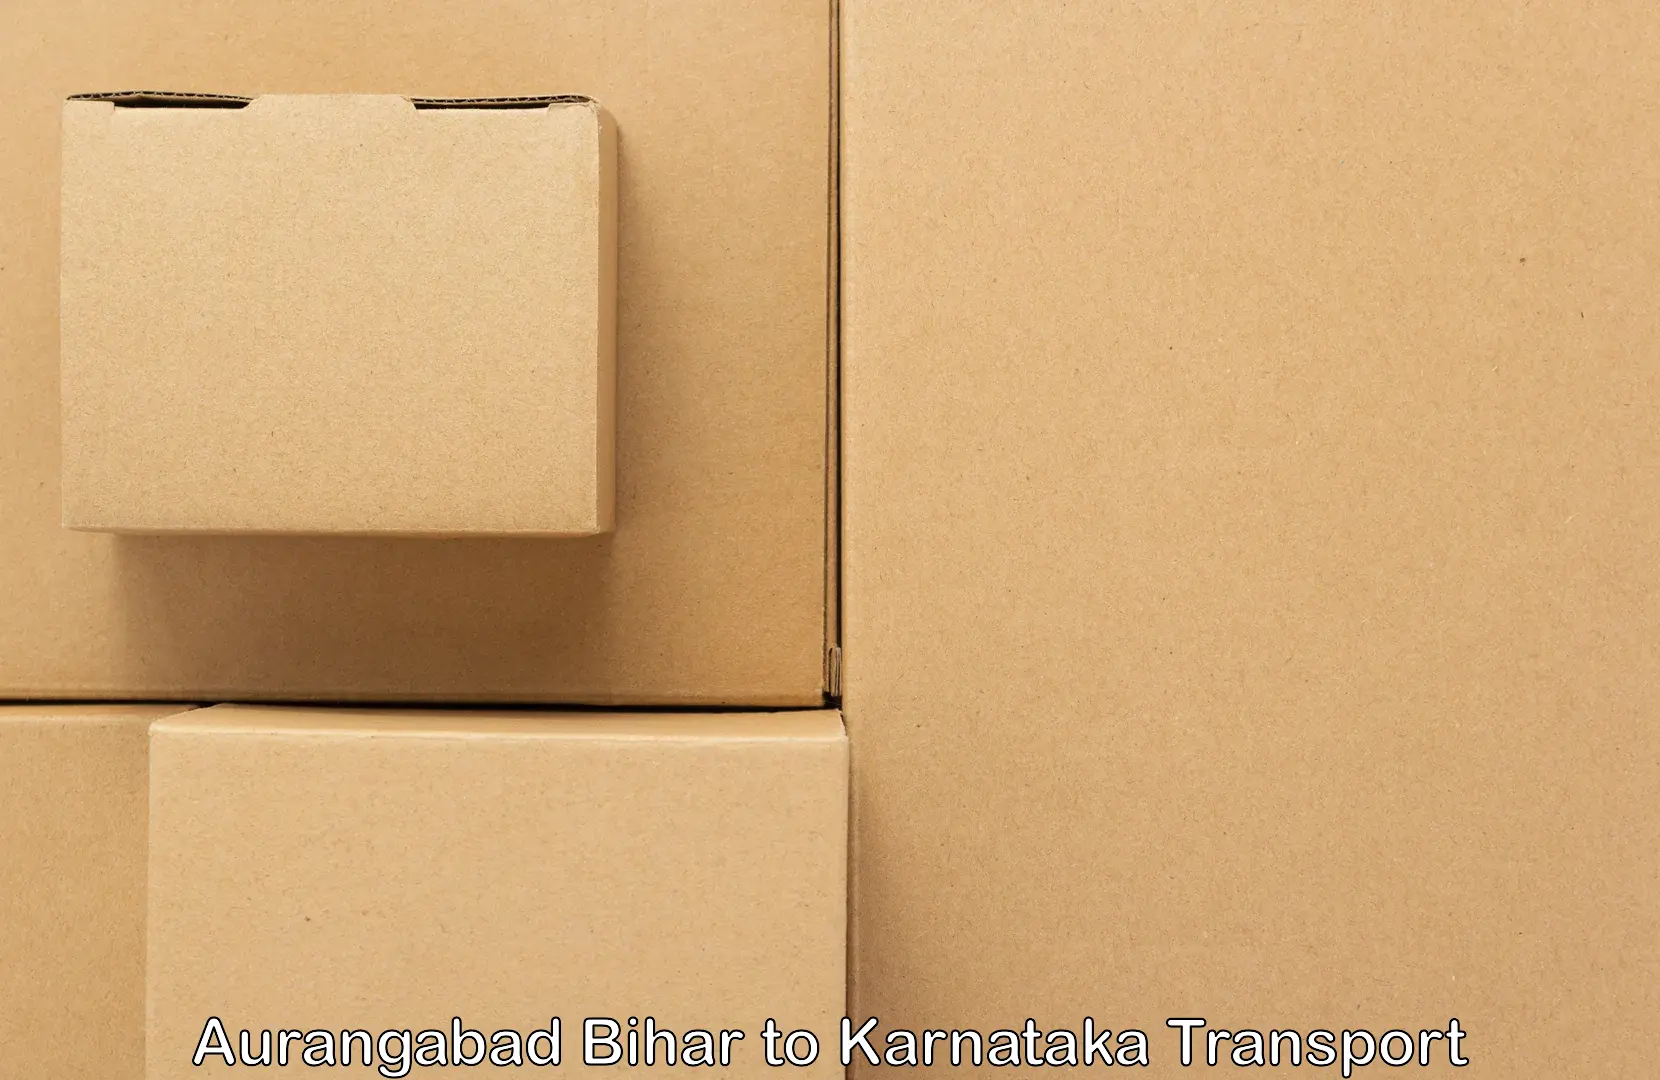 Container transportation services Aurangabad Bihar to Mangalore